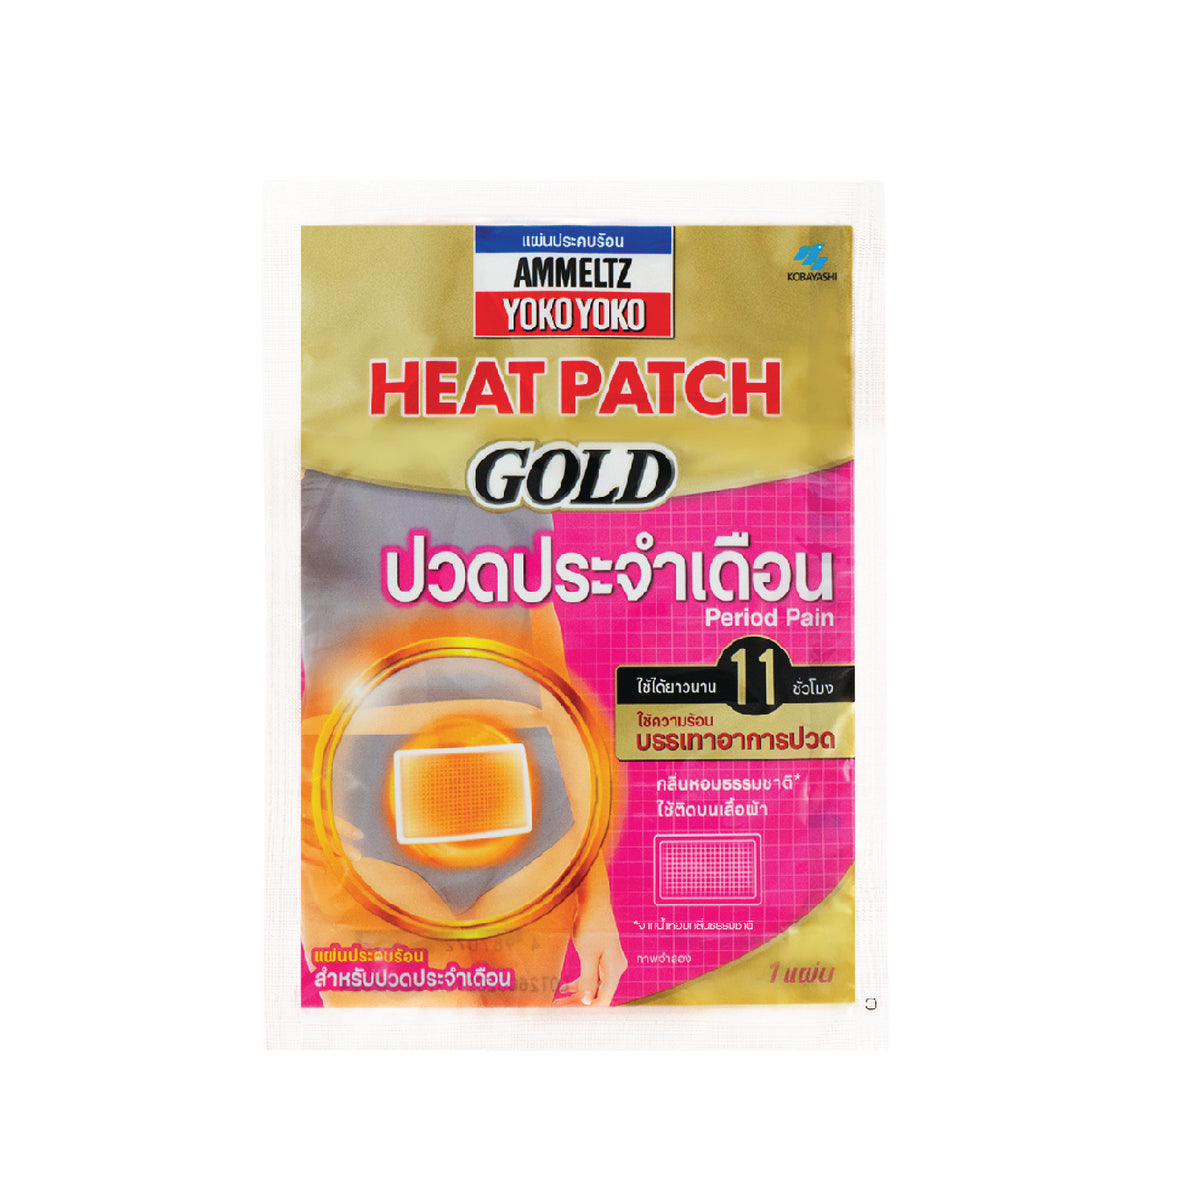 Ammeltz Yoko Yoko Heat Patch Gold for menstrual cramps